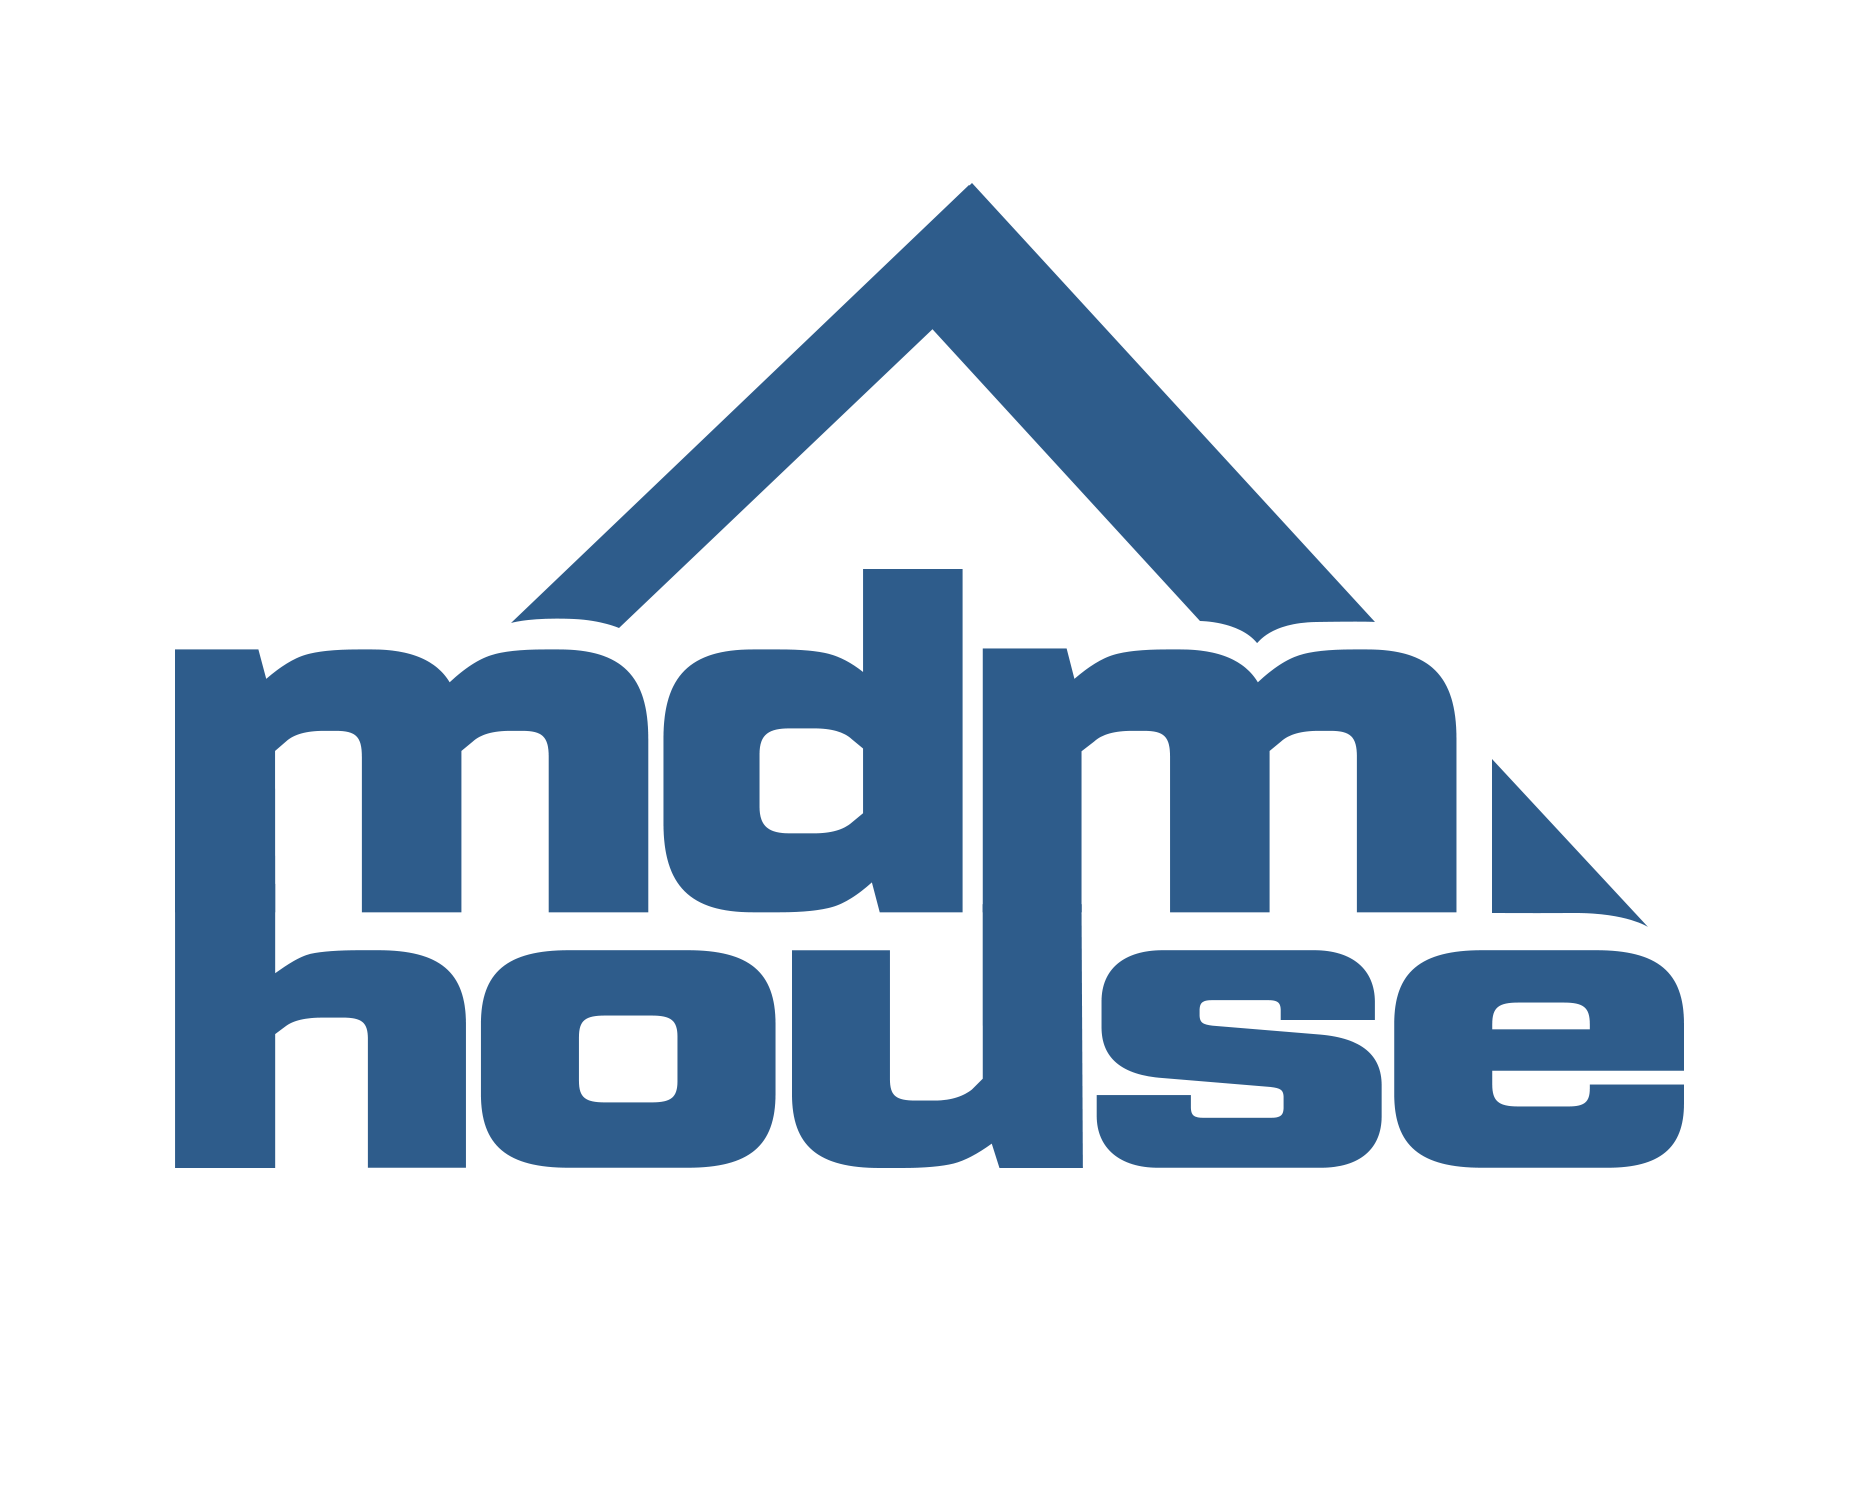 MDM House company logo with text